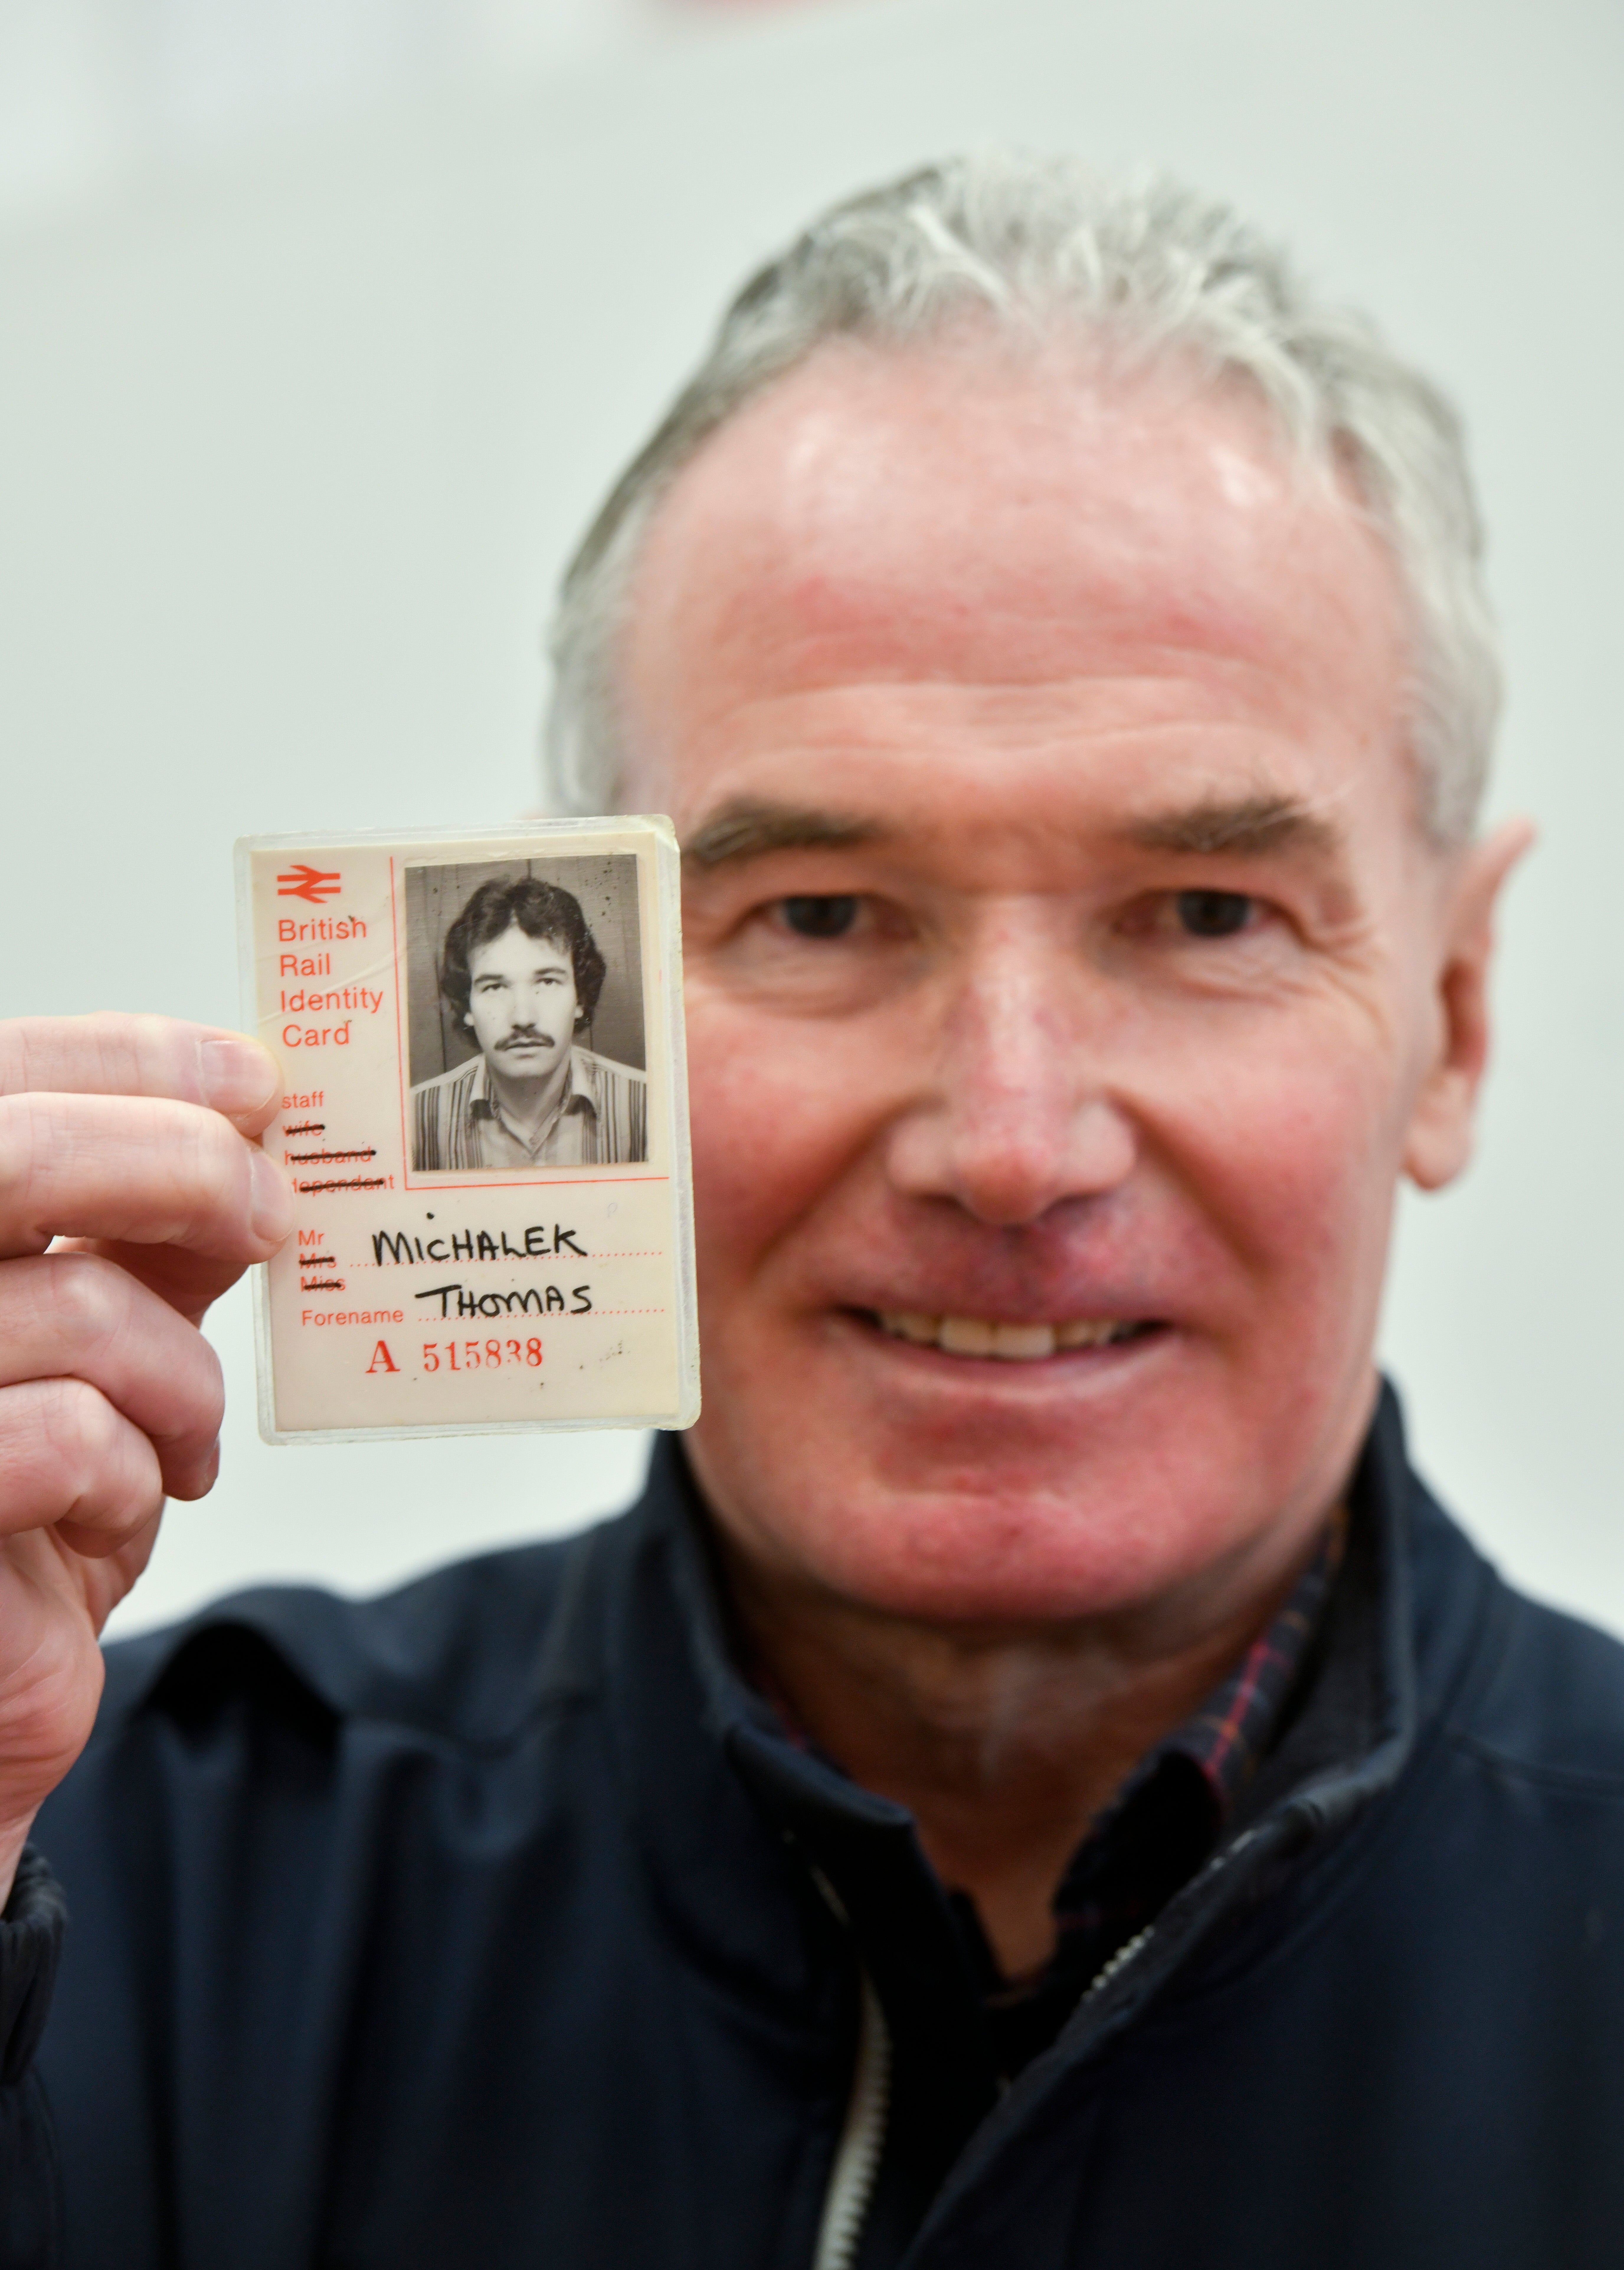 Tommy Michalek with his British Rail identity card (Avanti West Coast/PA)